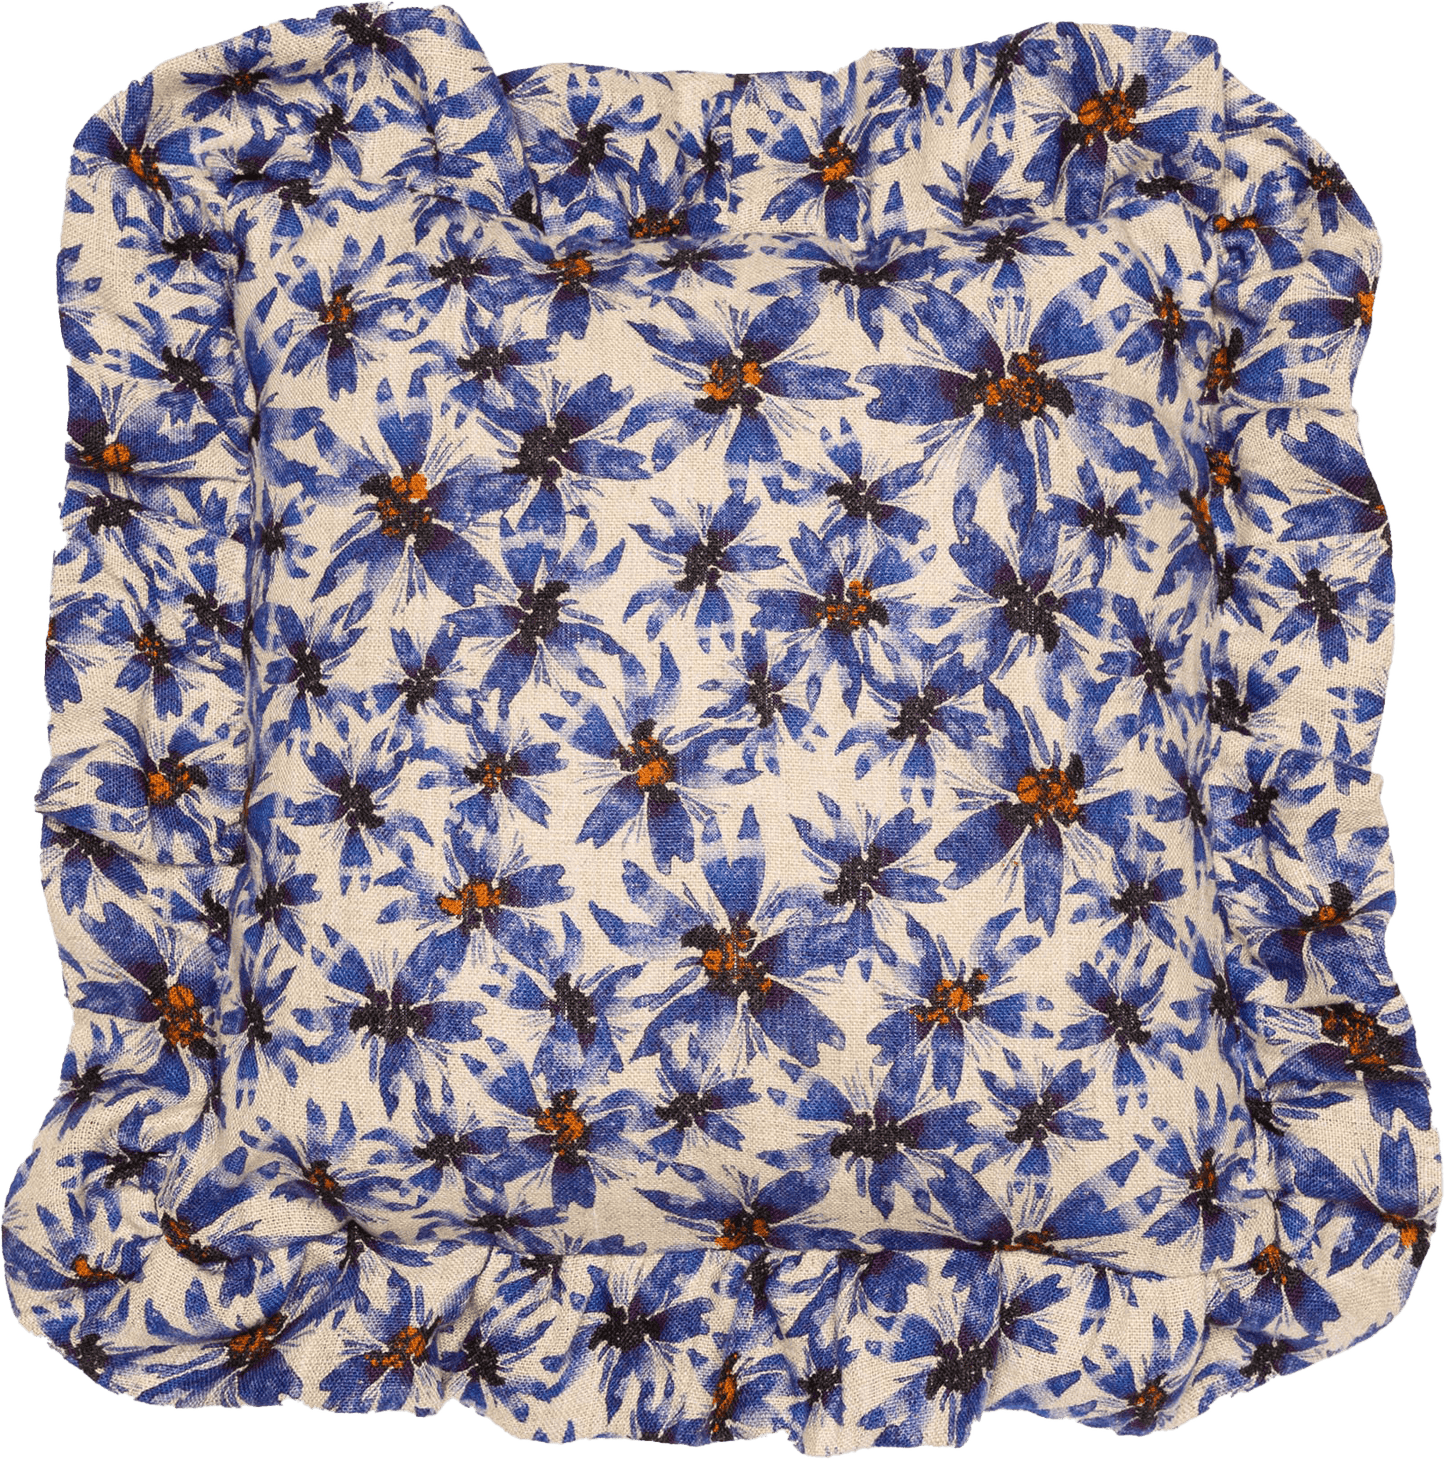 Organic Linen Ruffled Pillow Cover in Blue Harem